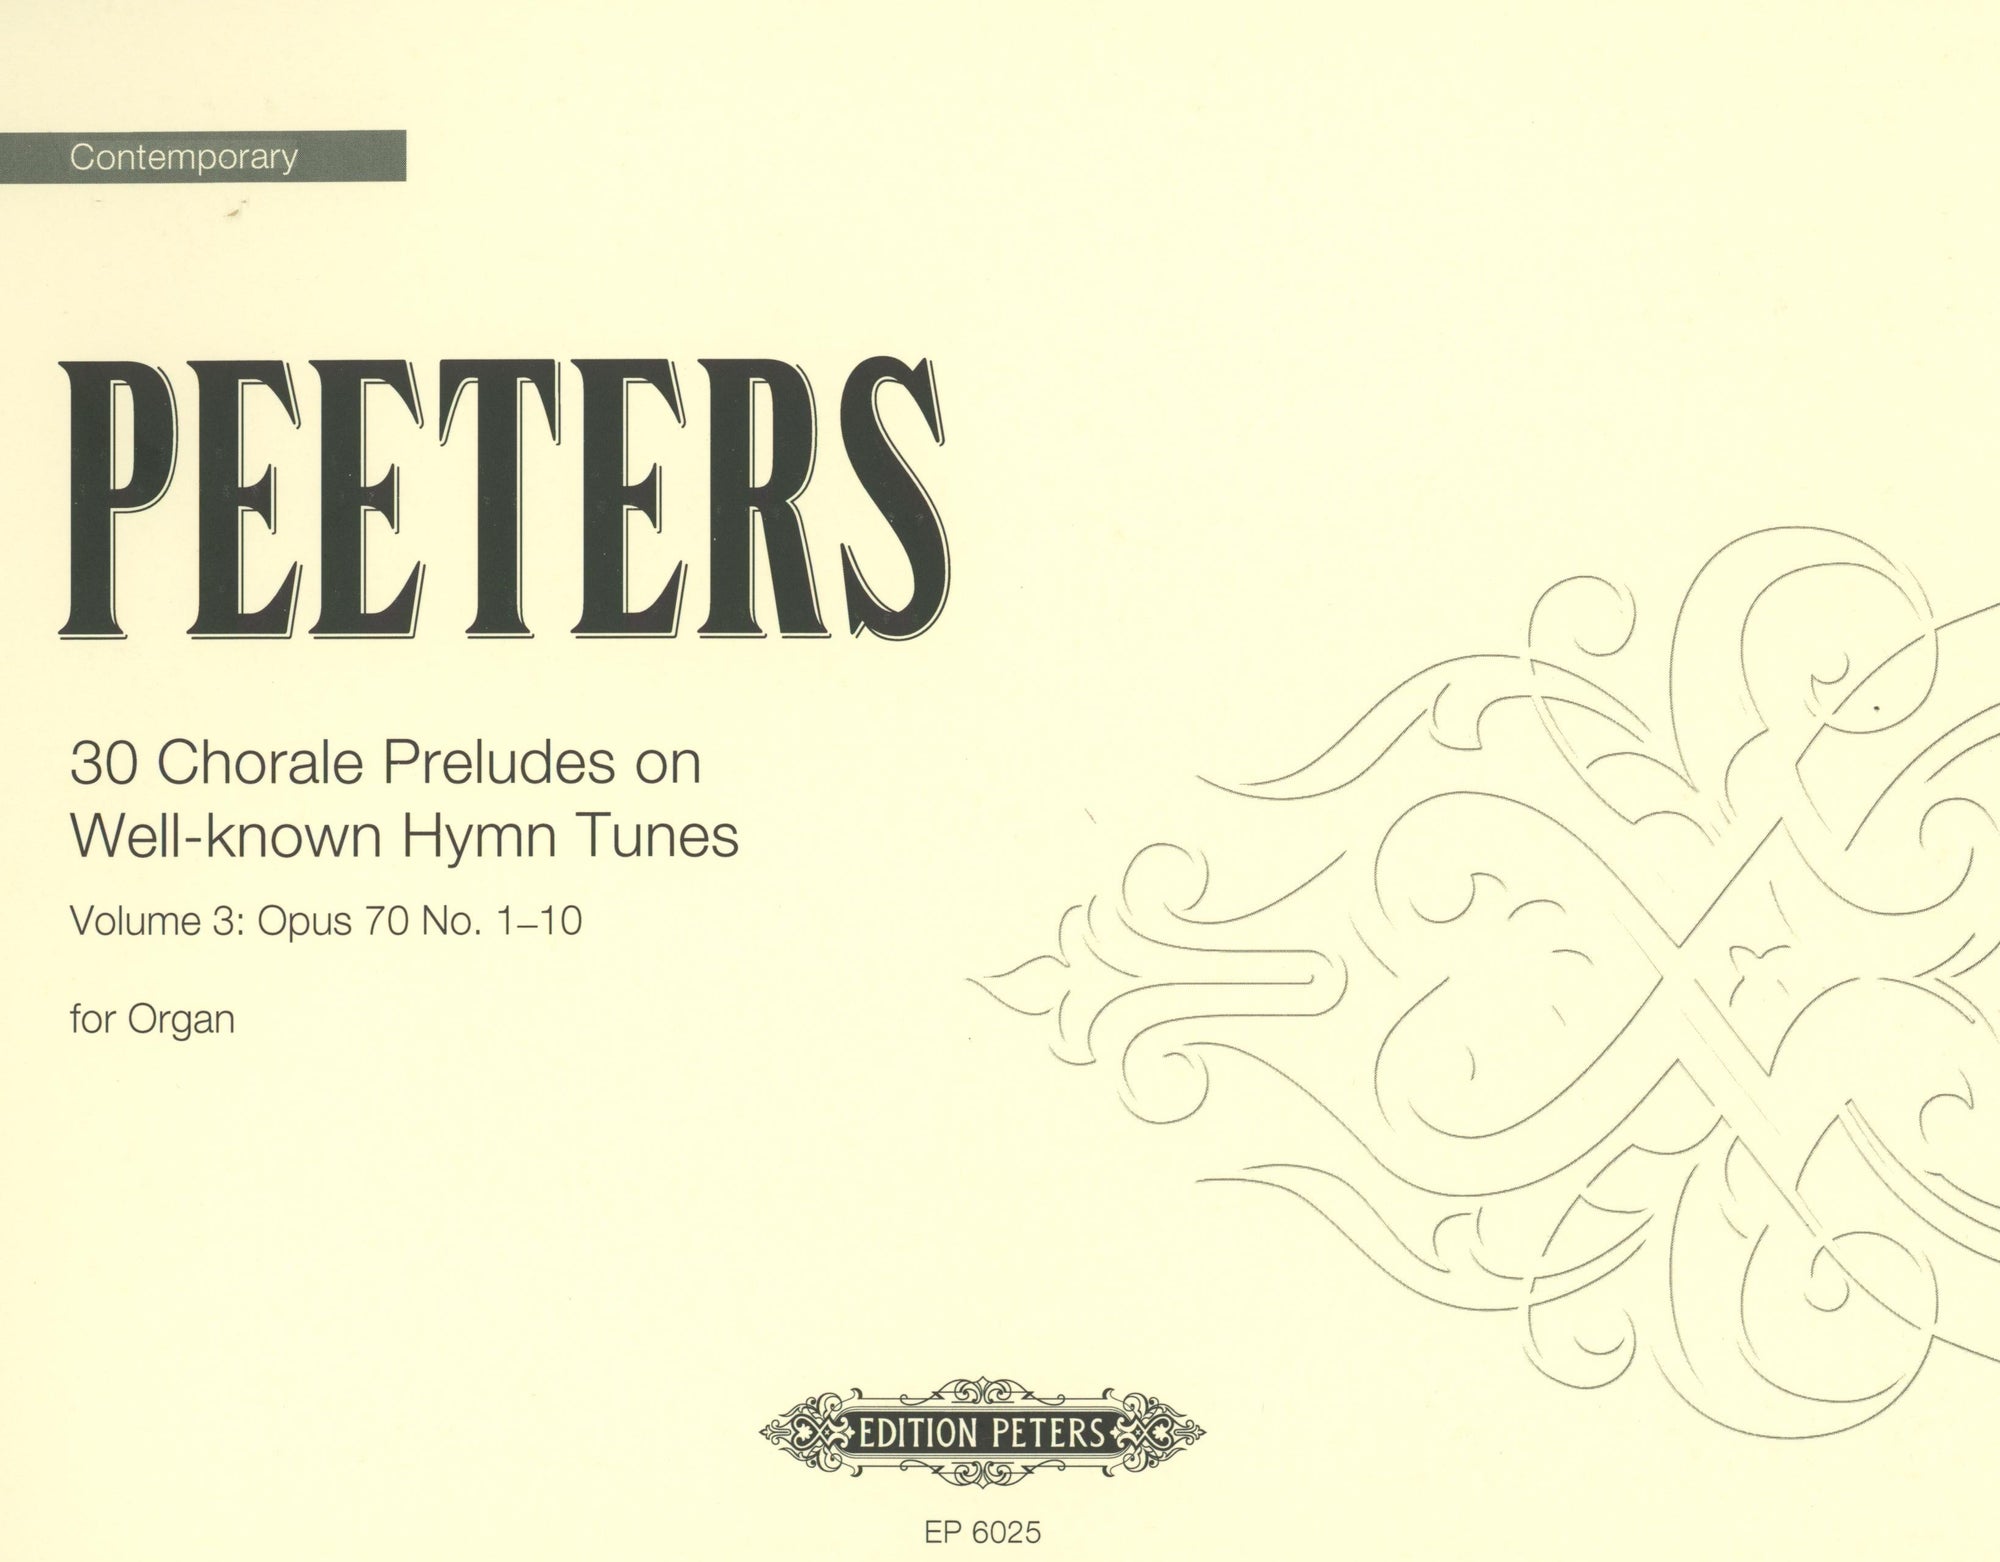 Peeters: 10 Chorale Preludes on Well-known Hymn Tunes, Op. 70